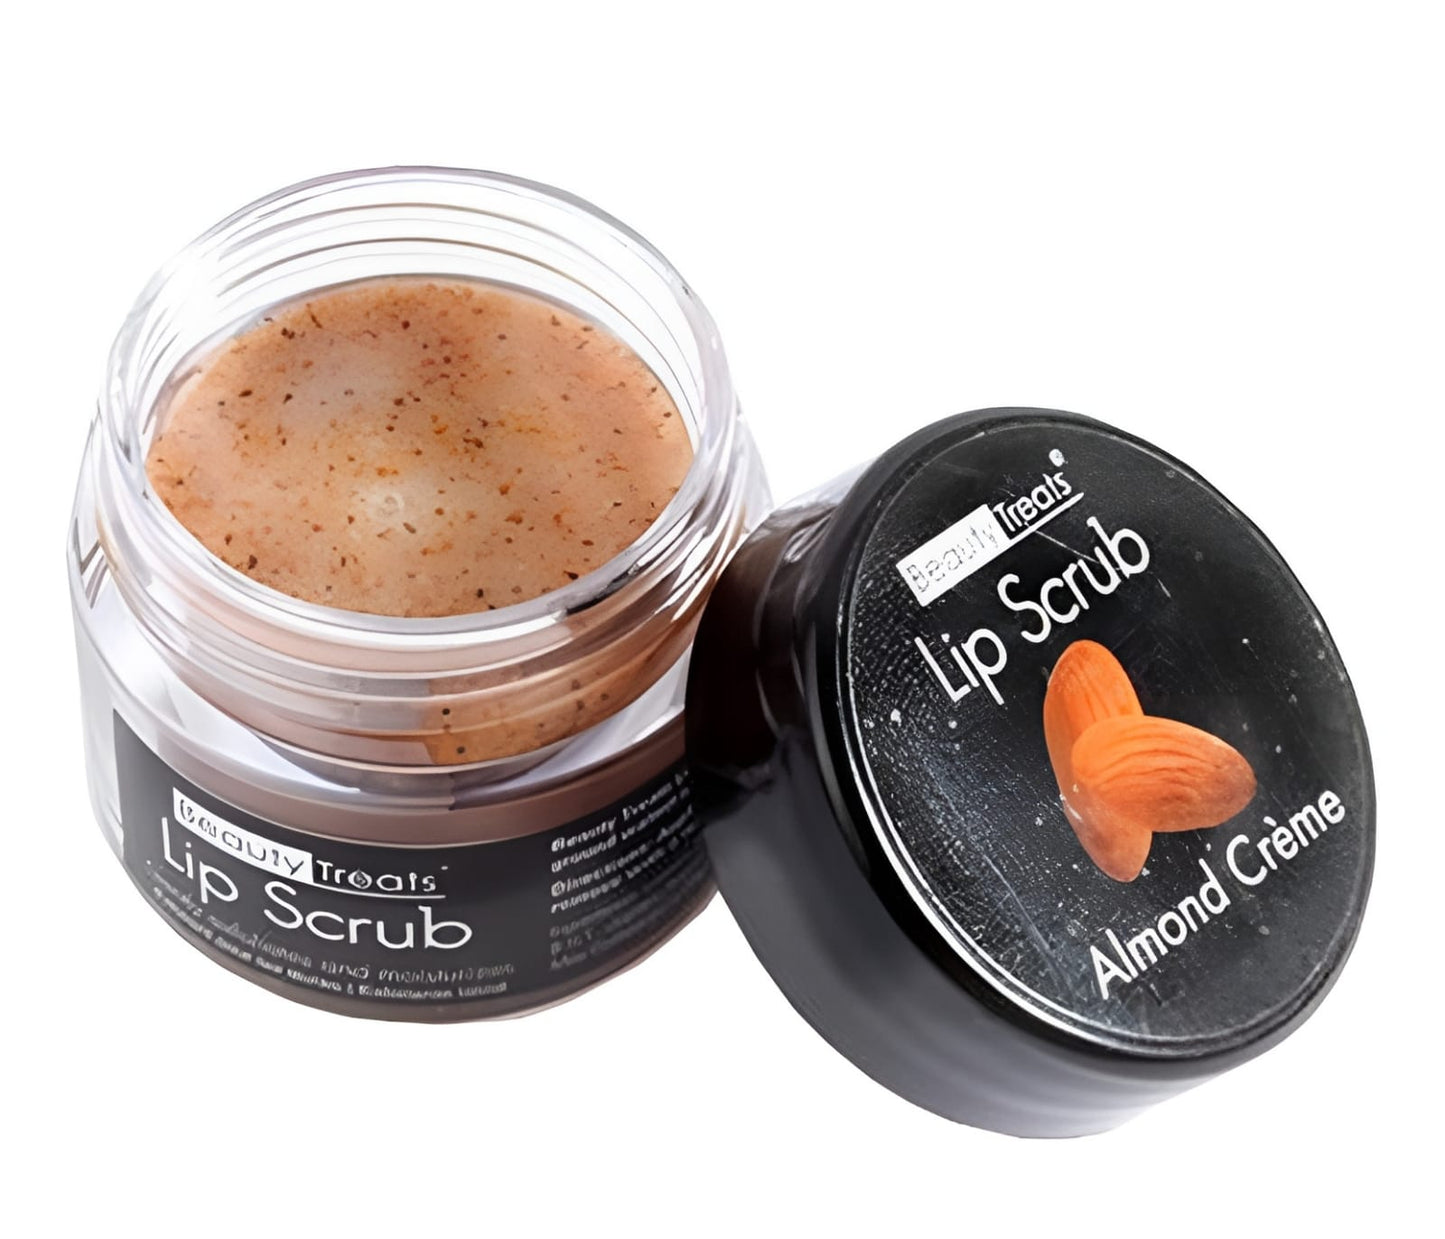 Beauty Treats Lip Scrub - Lip Treatment , Vitamin E, Moisturize Lips!